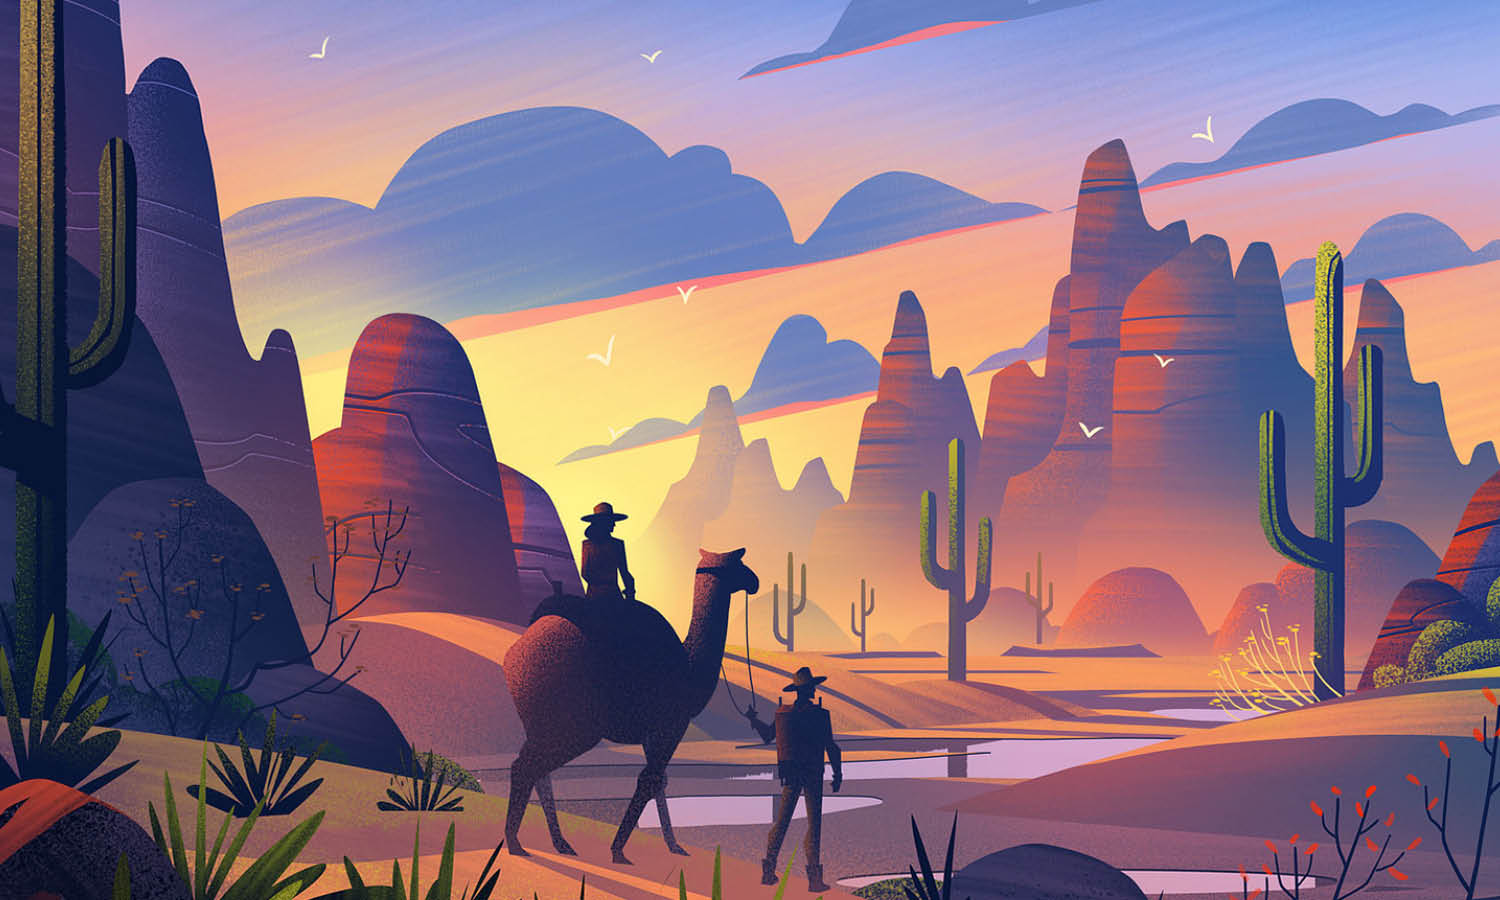 30 Best Desert Illustration Ideas You Should Check